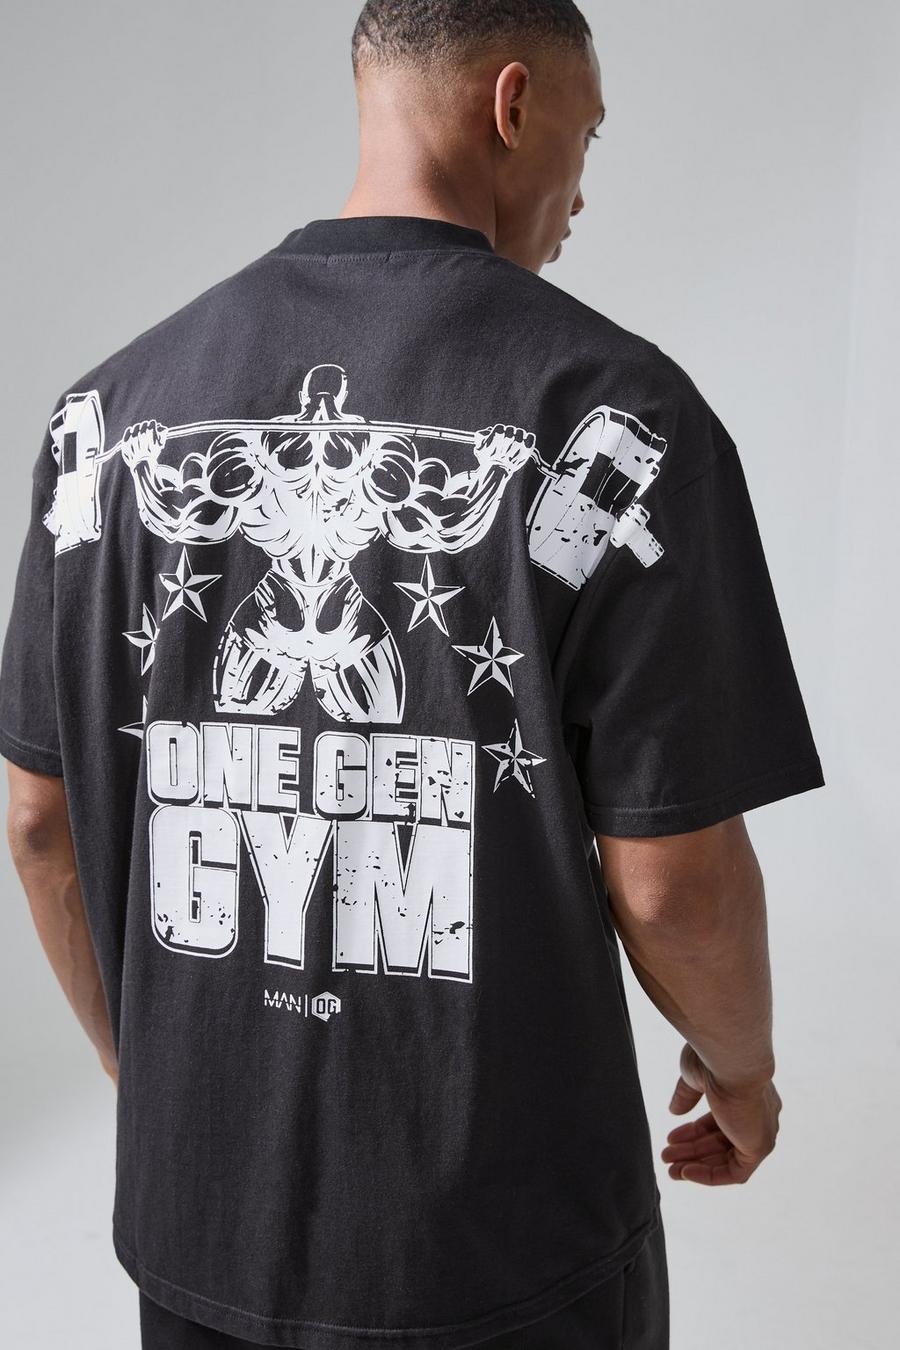 Man Active X Og Gym Oversize T-Shirt mit Xxl Print, Black